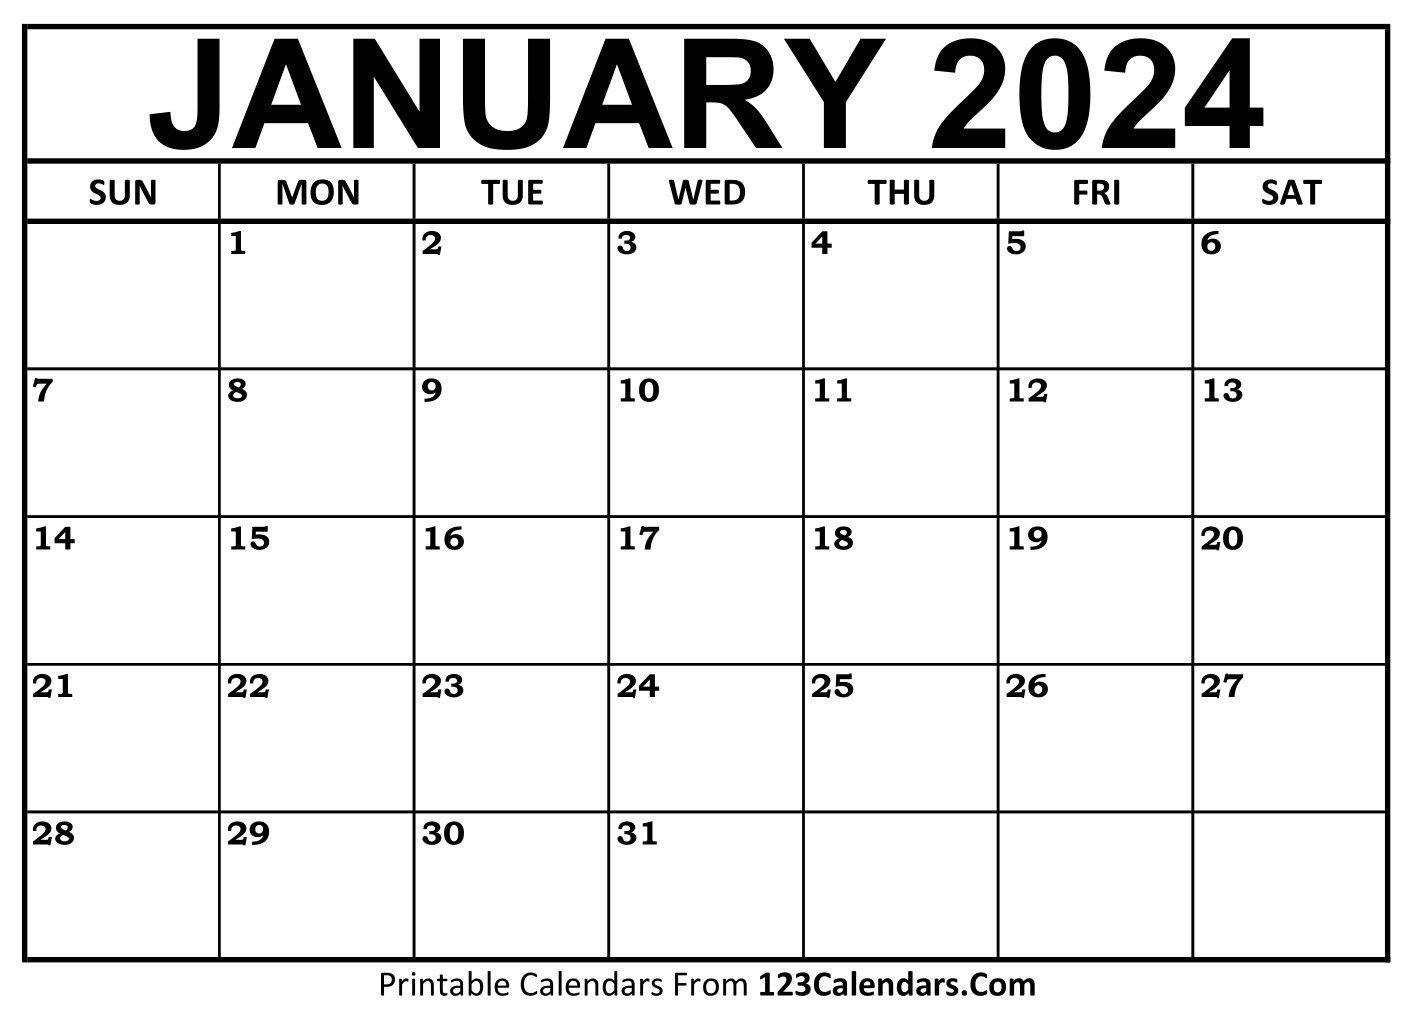 Printable January 2024 Calendar Templates - 123Calendars | Blank Printable Calendar 2024